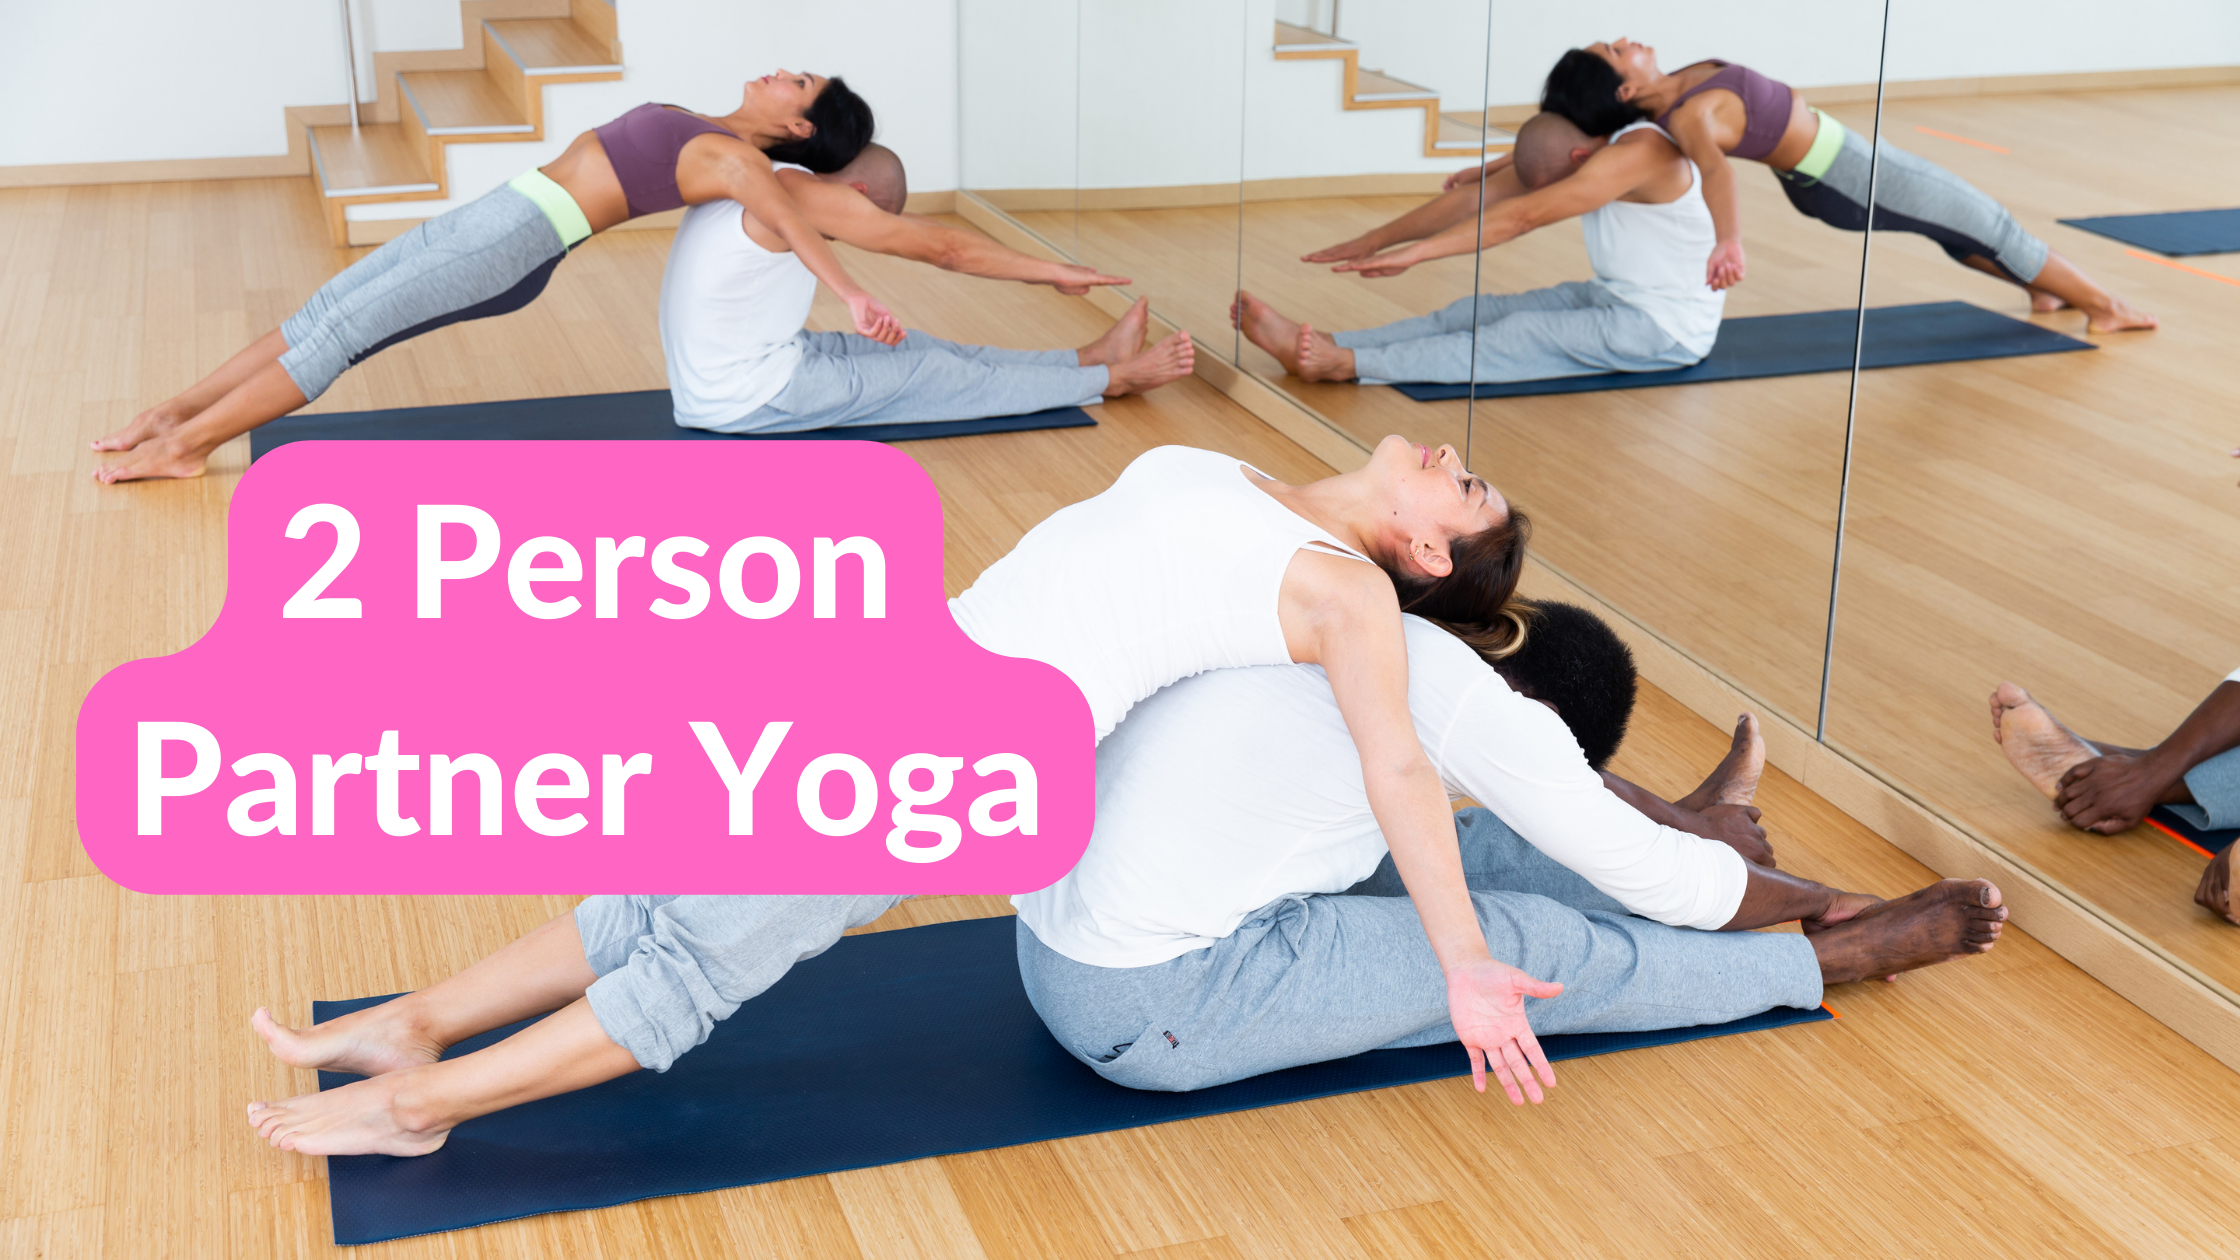 10 Advanced yoga poses to improve your practice! – Nuu3